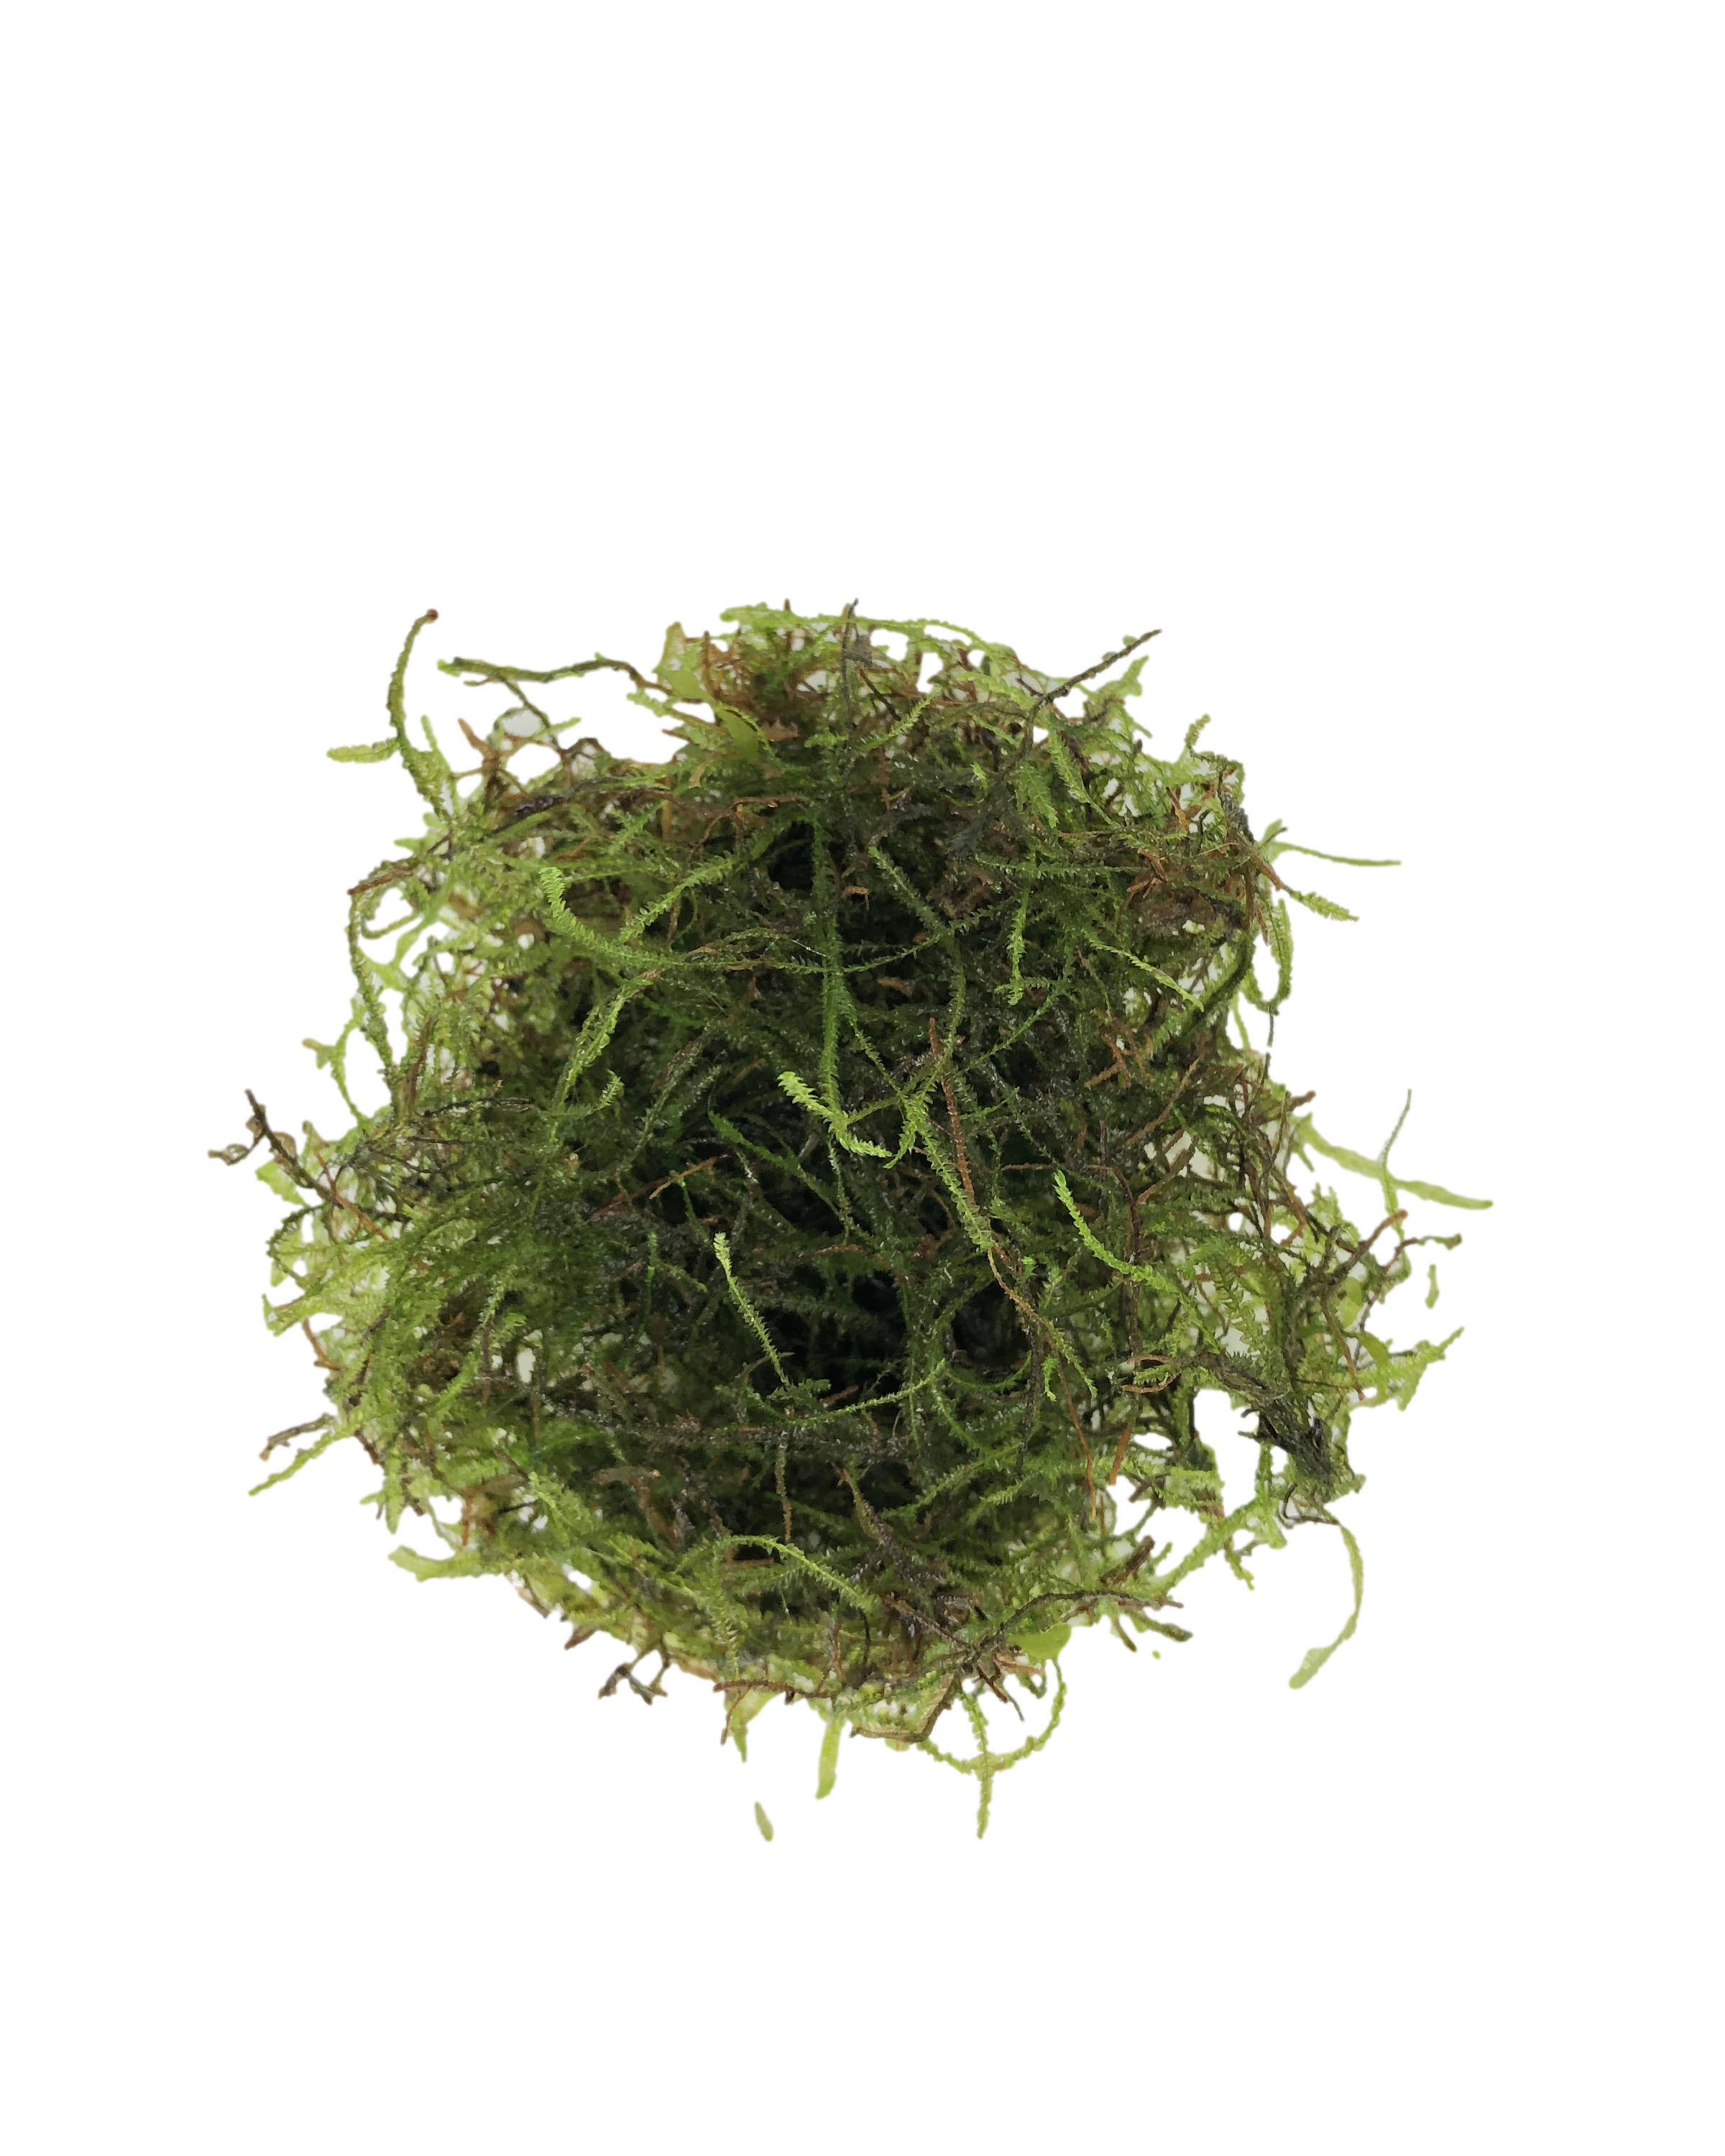 Deluxe Java Moss (Taxiphyllum barbieri / Vesicularia dubyana), Loose Portion